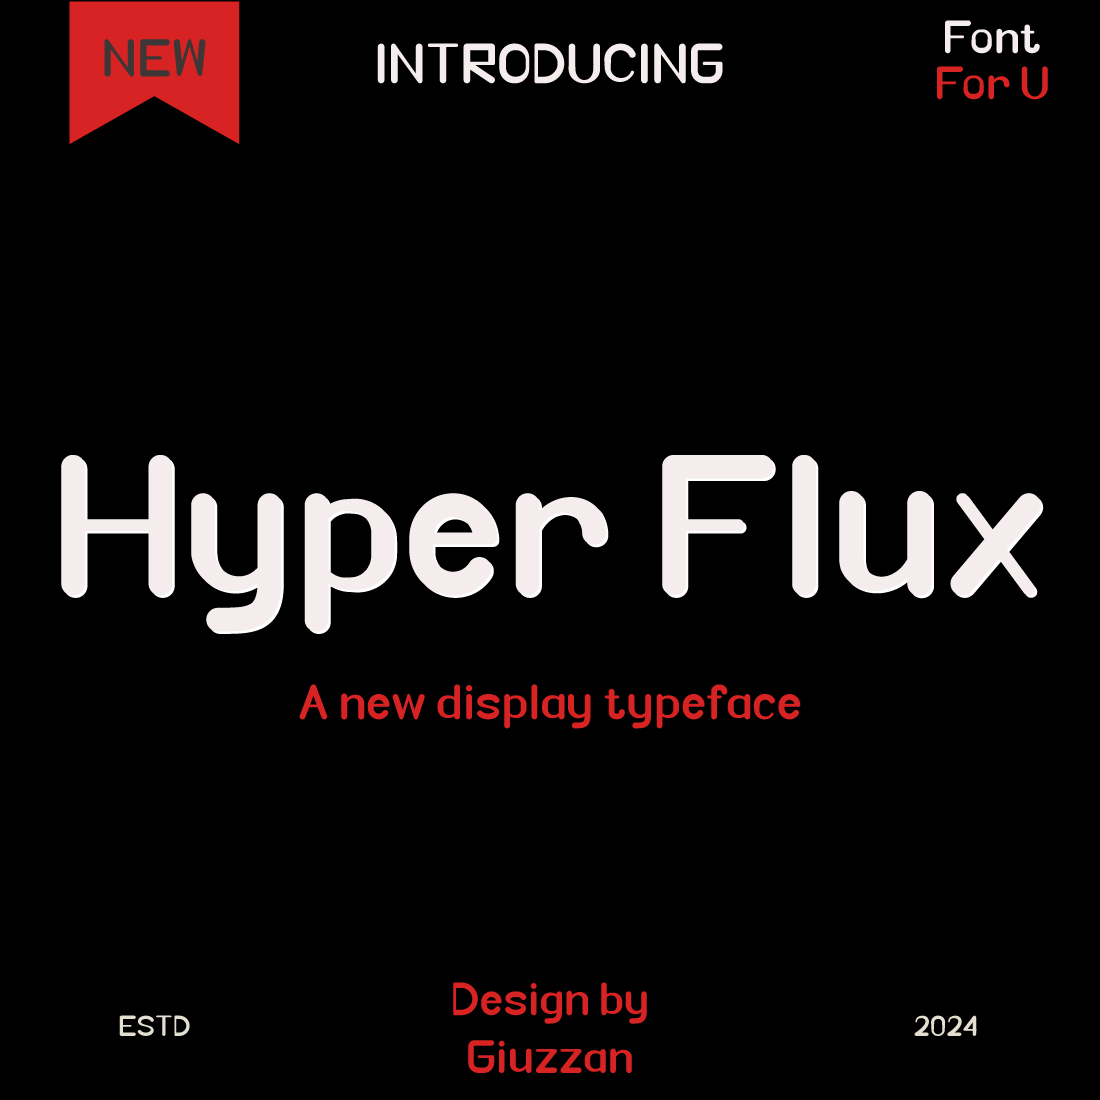 Hyper Flux cover image.